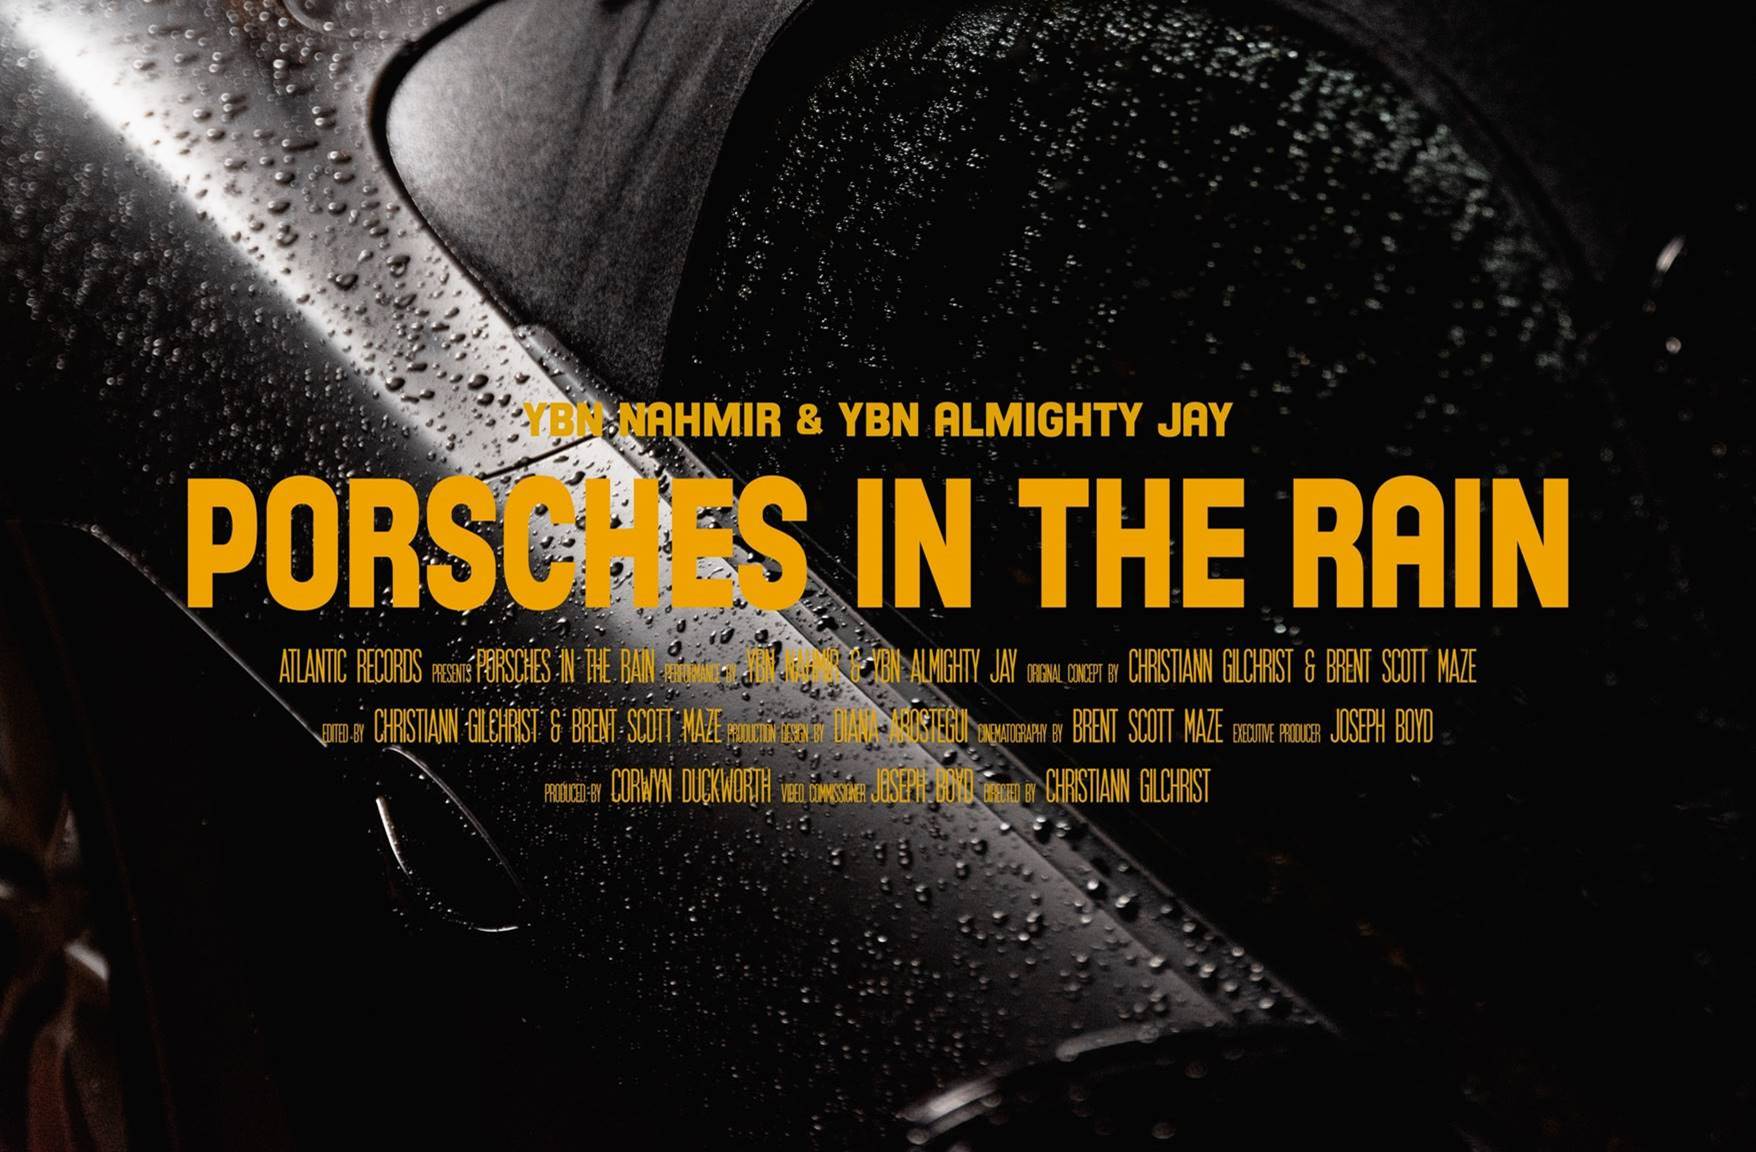 [WATCH] YBN Nahmir & YBN Almighty Jay’s Video “Porsches In The Rain”